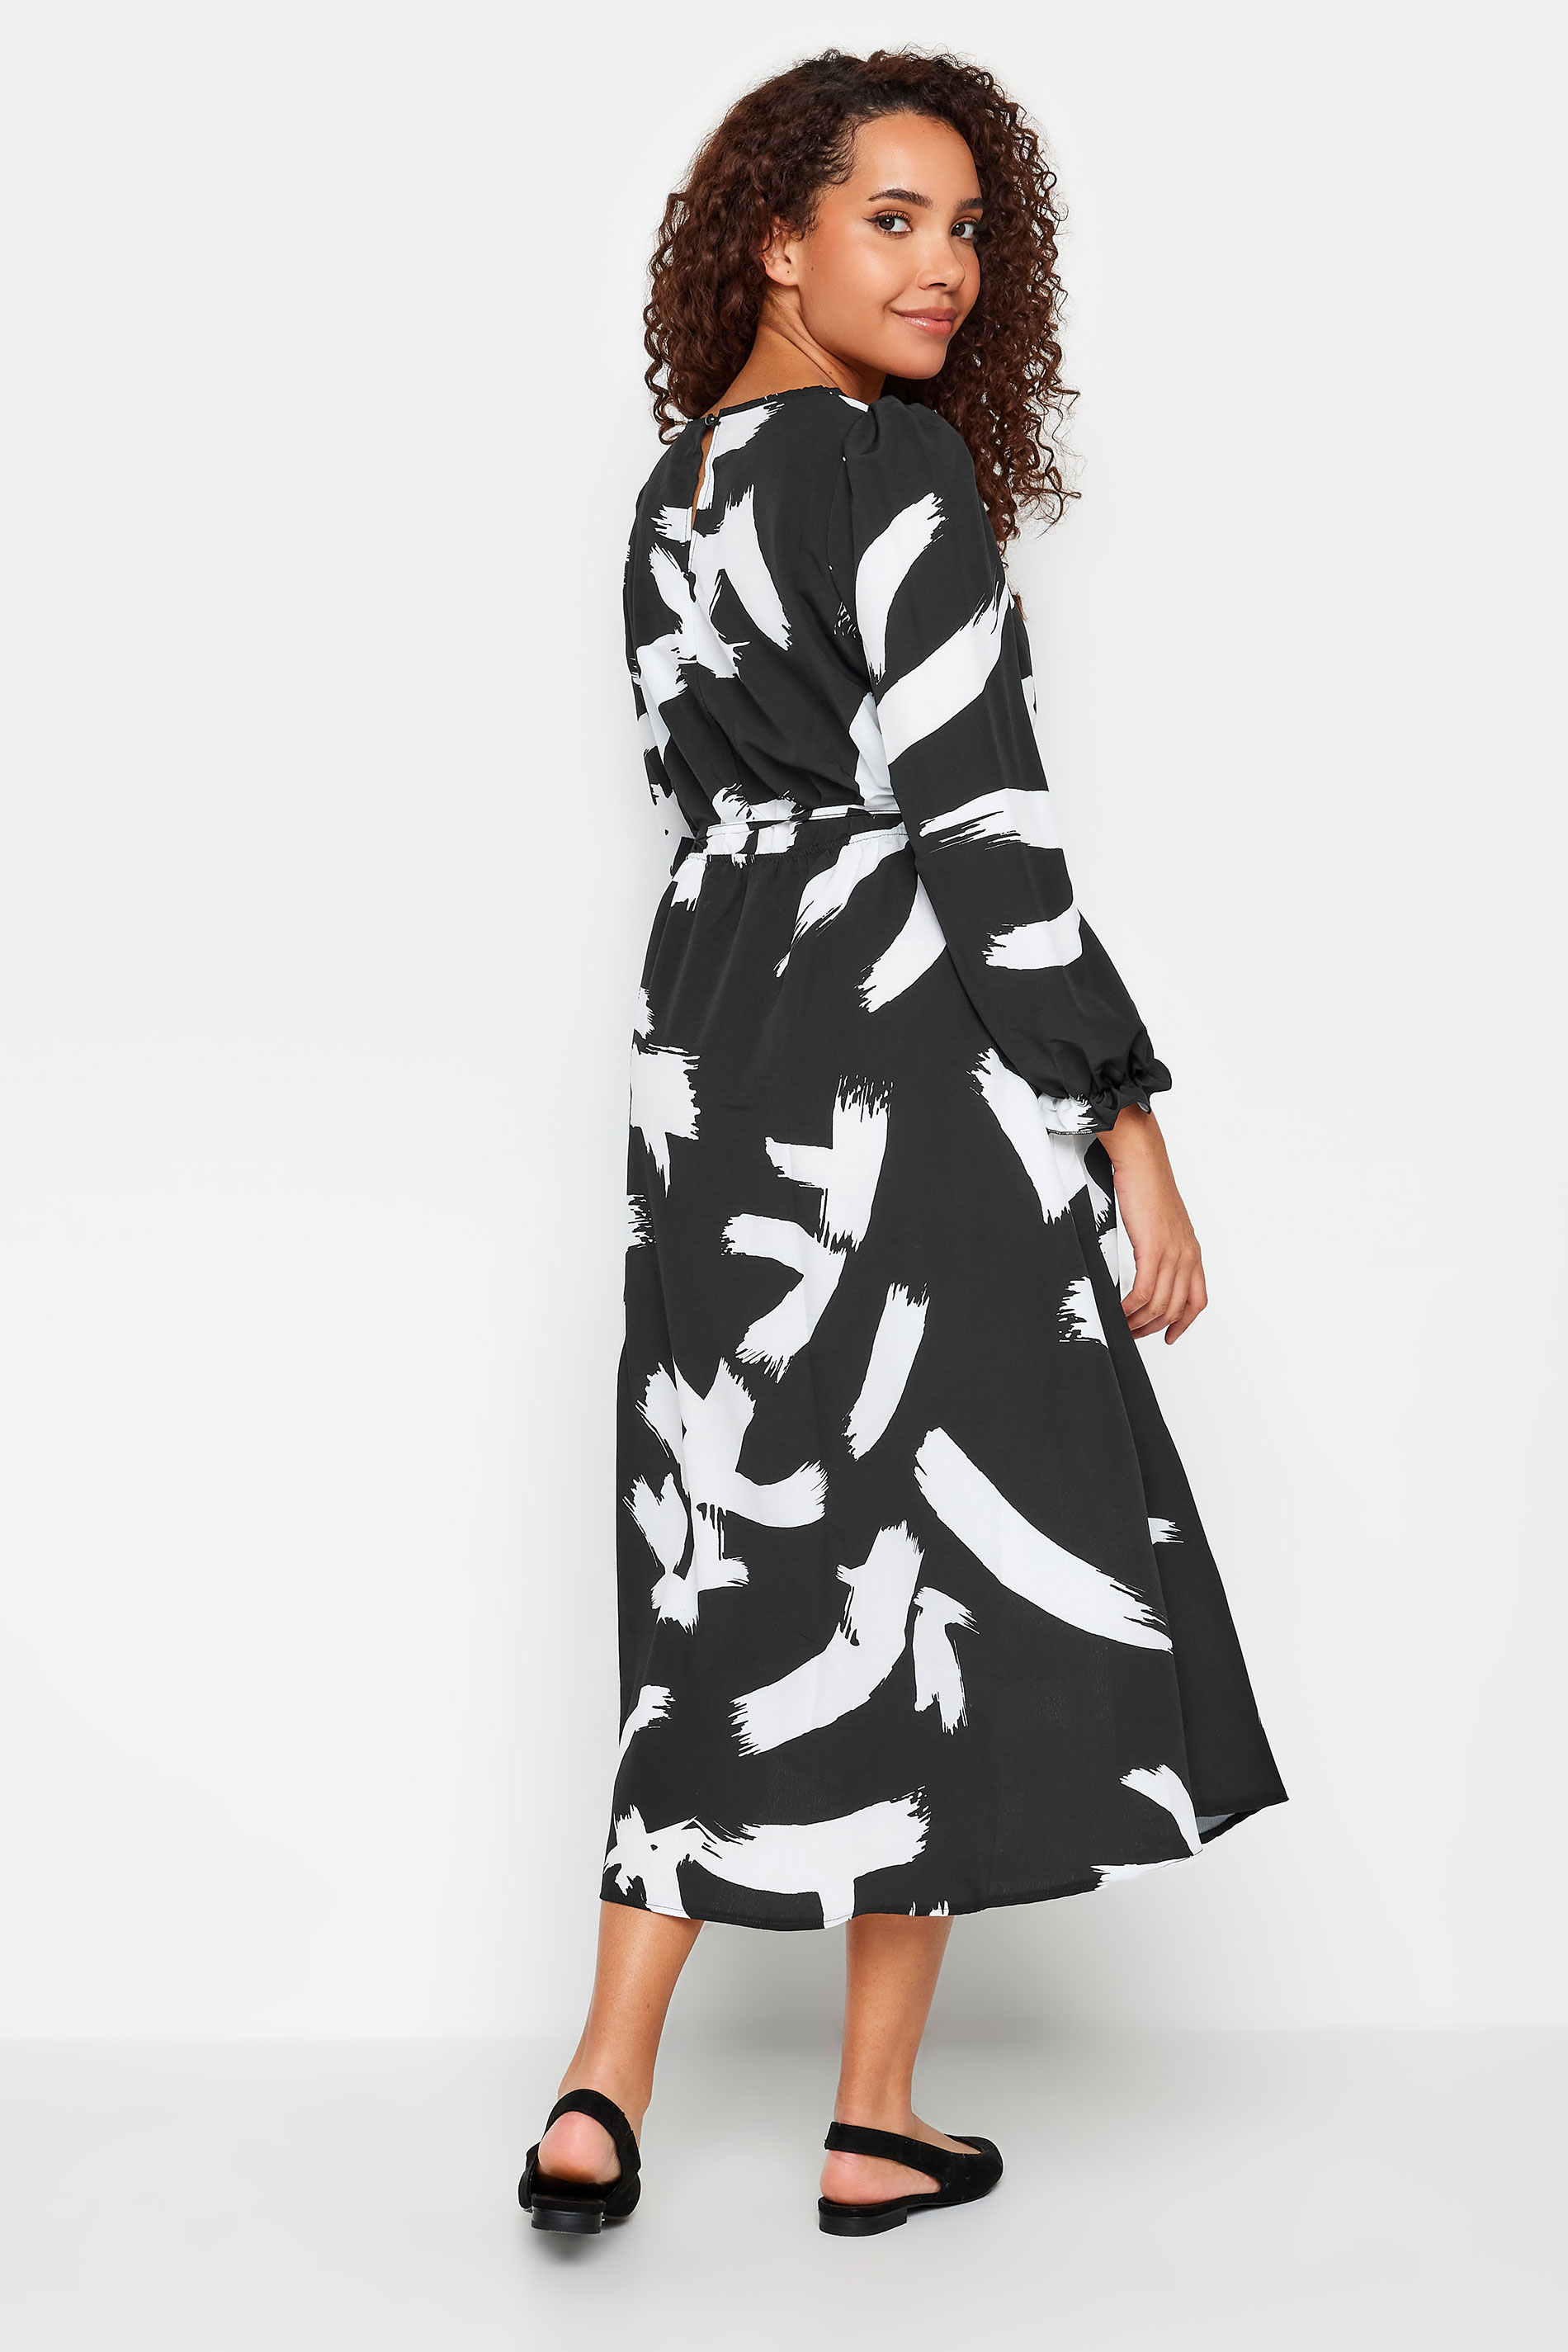 M&Co Black Abstract Print Smock Dress | M&Co 2